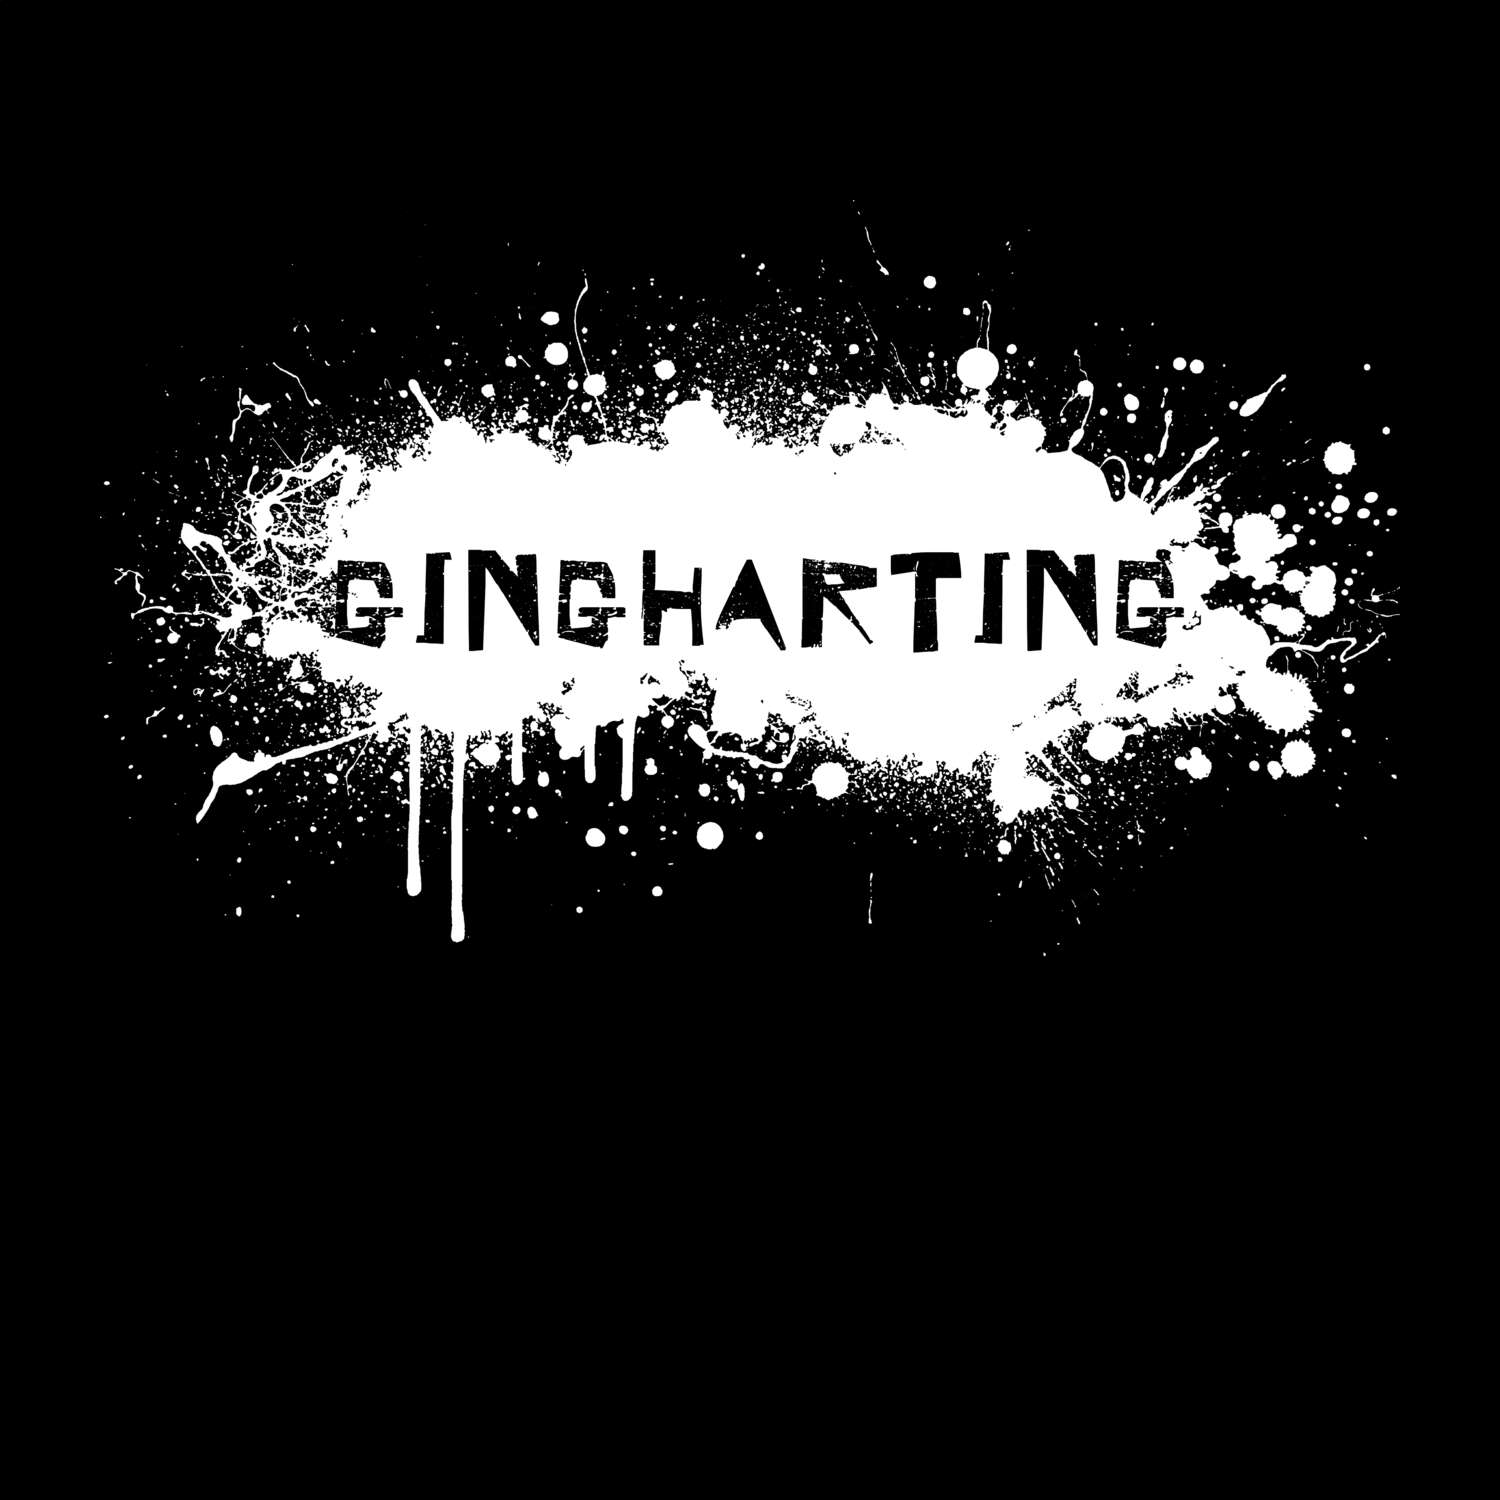 Gingharting T-Shirt »Paint Splash Punk«